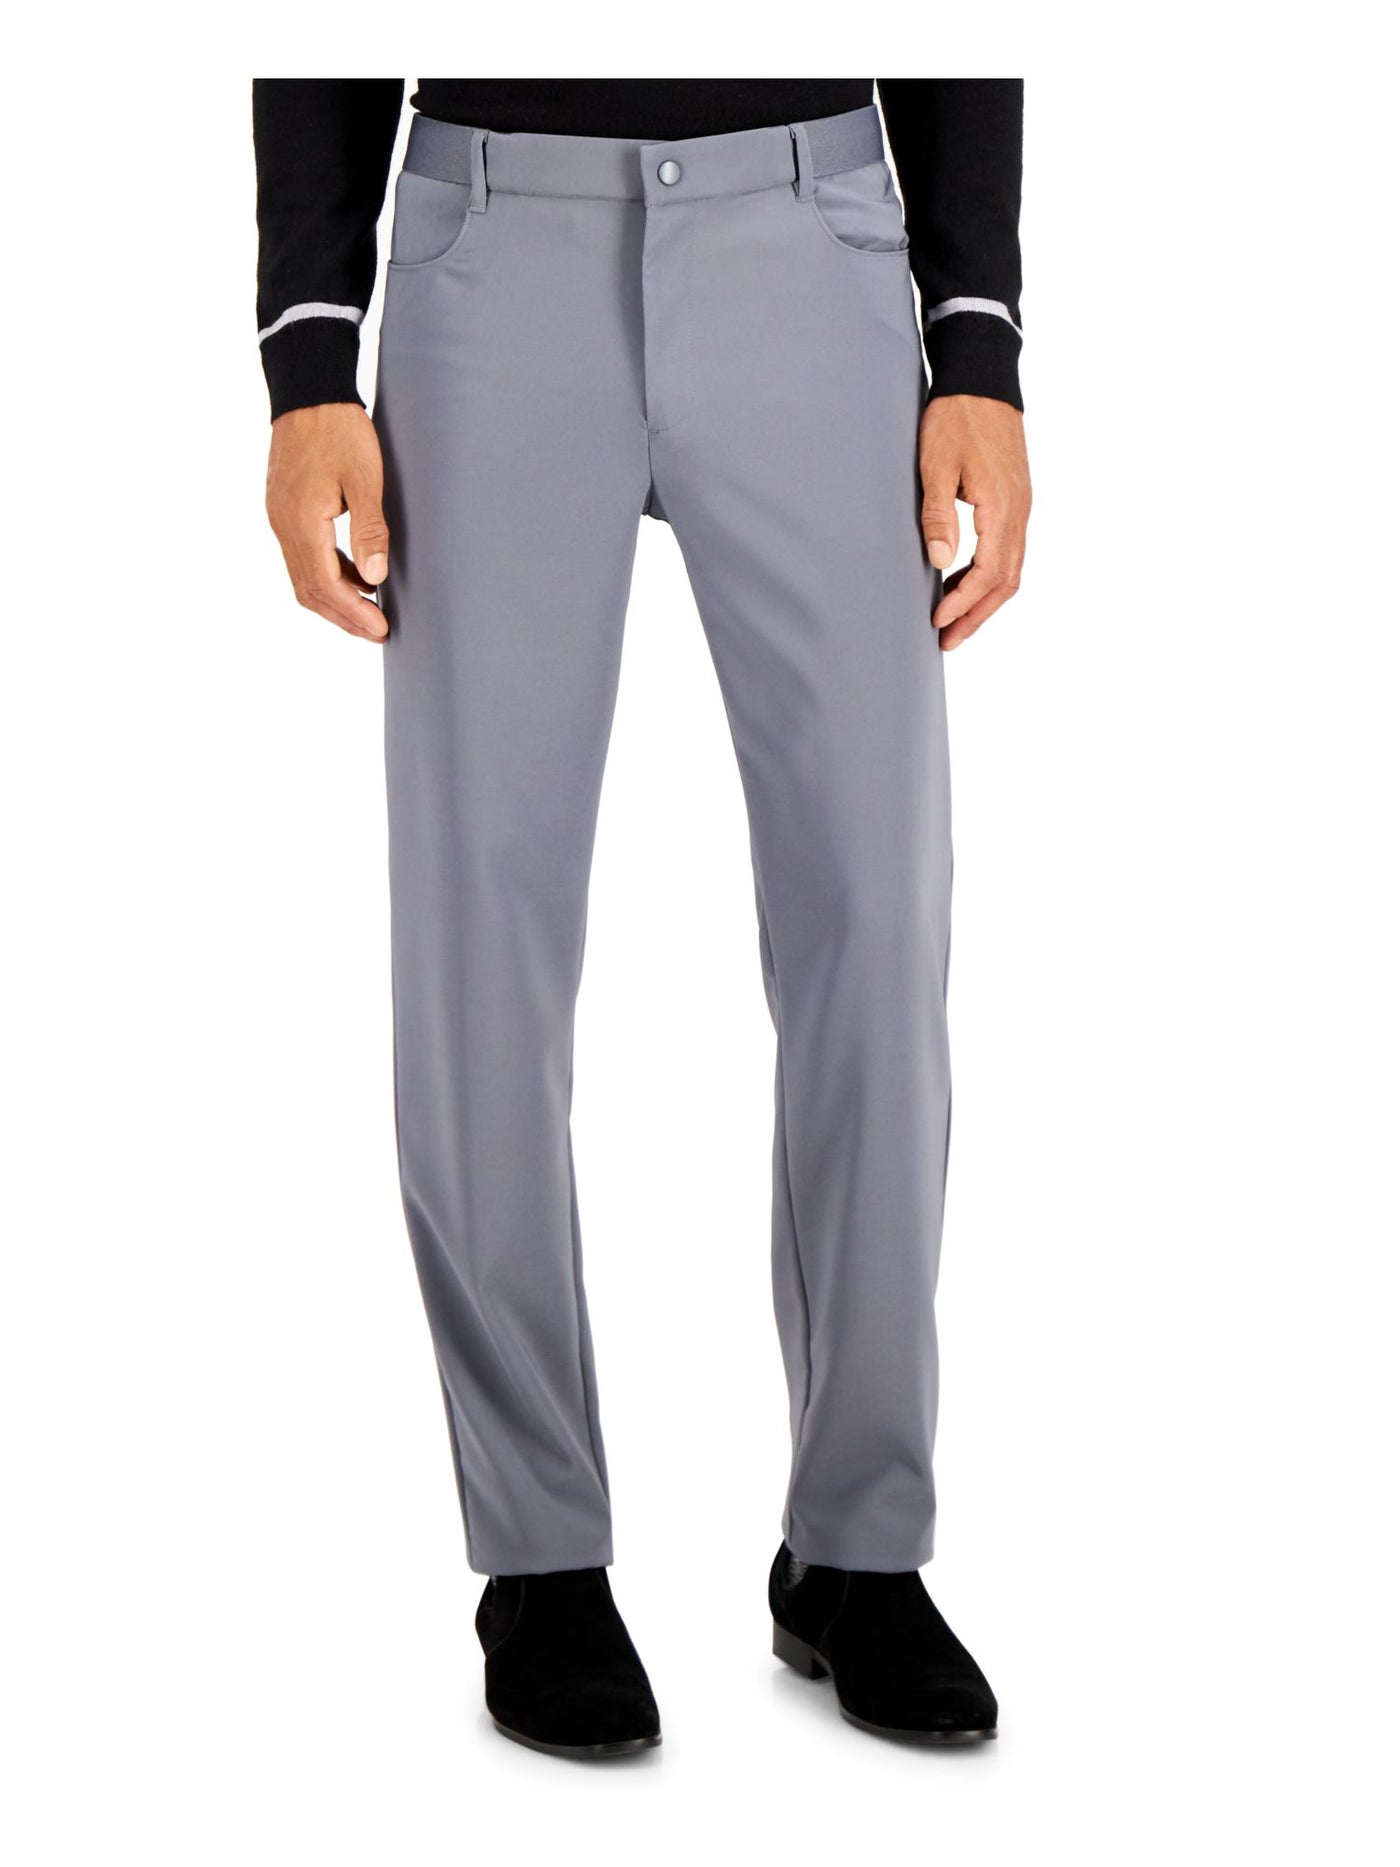 ALFANI Mens Gray Flat Front, Classic Fit Stretch Pants S